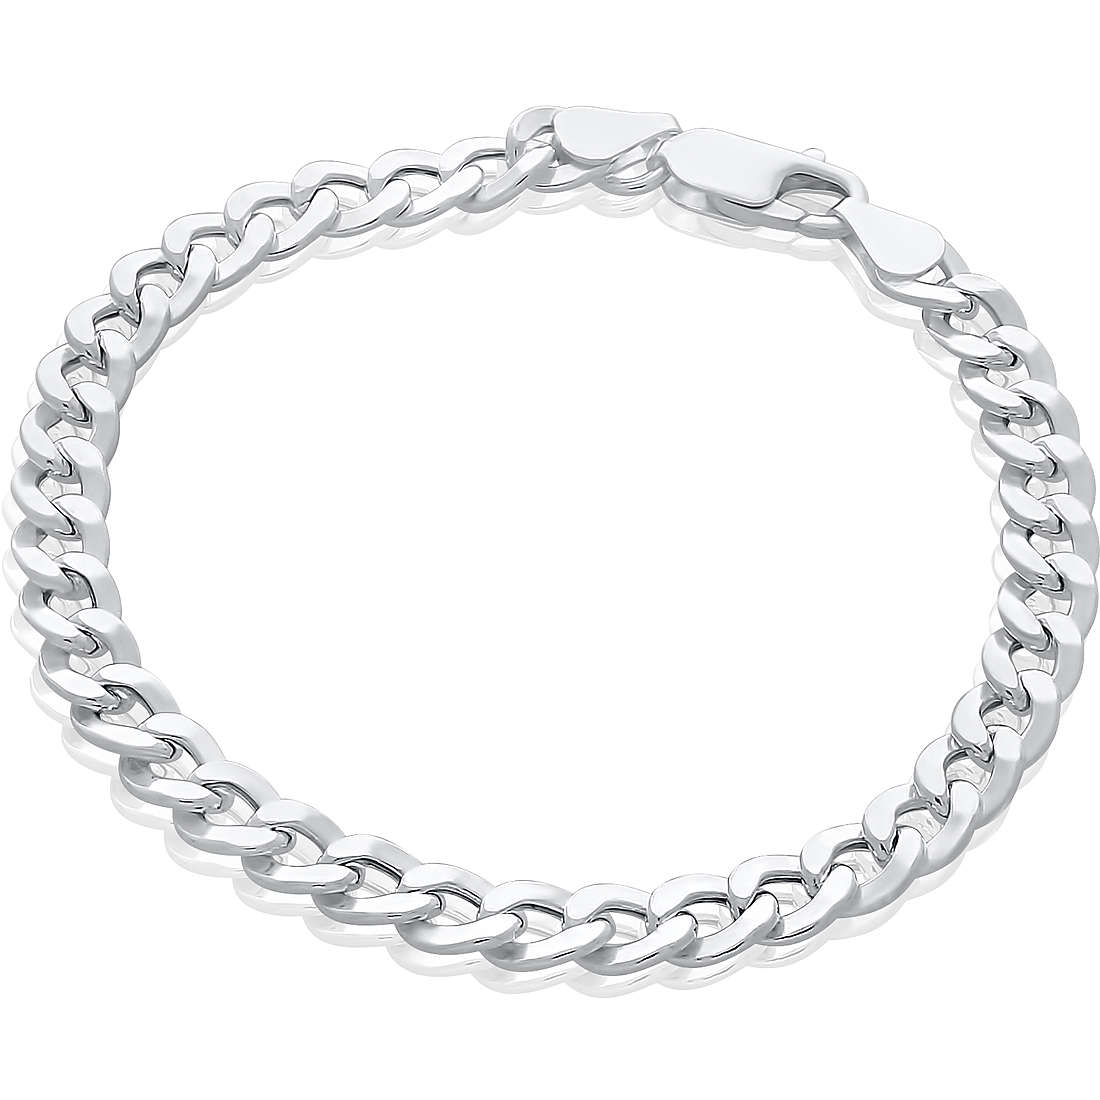 bracelet woman Chain 925 Silver jewel GioiaPura GYBARW0943-AG